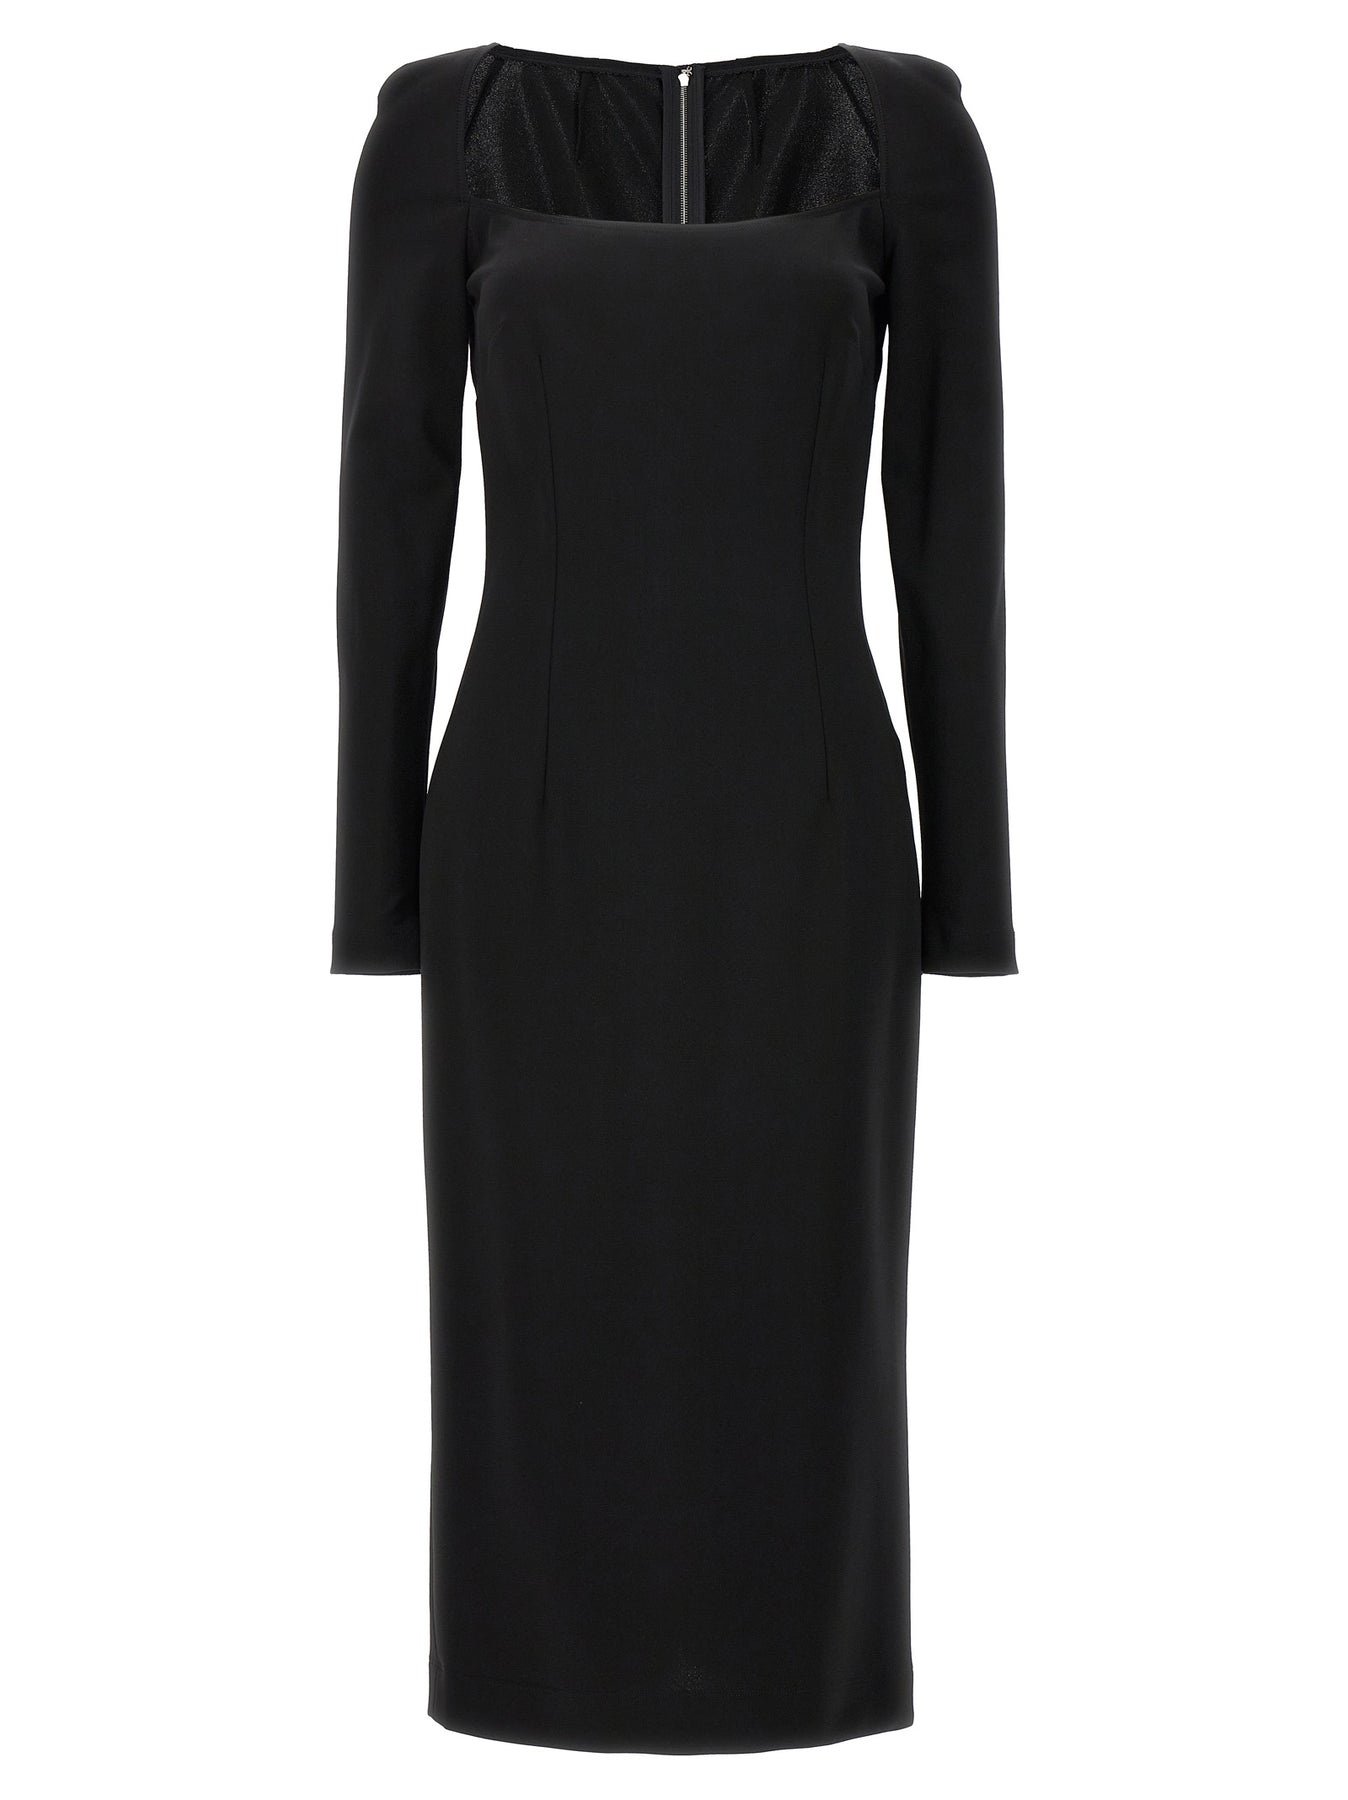 Milan Stitch Dress Dresses Black - 1